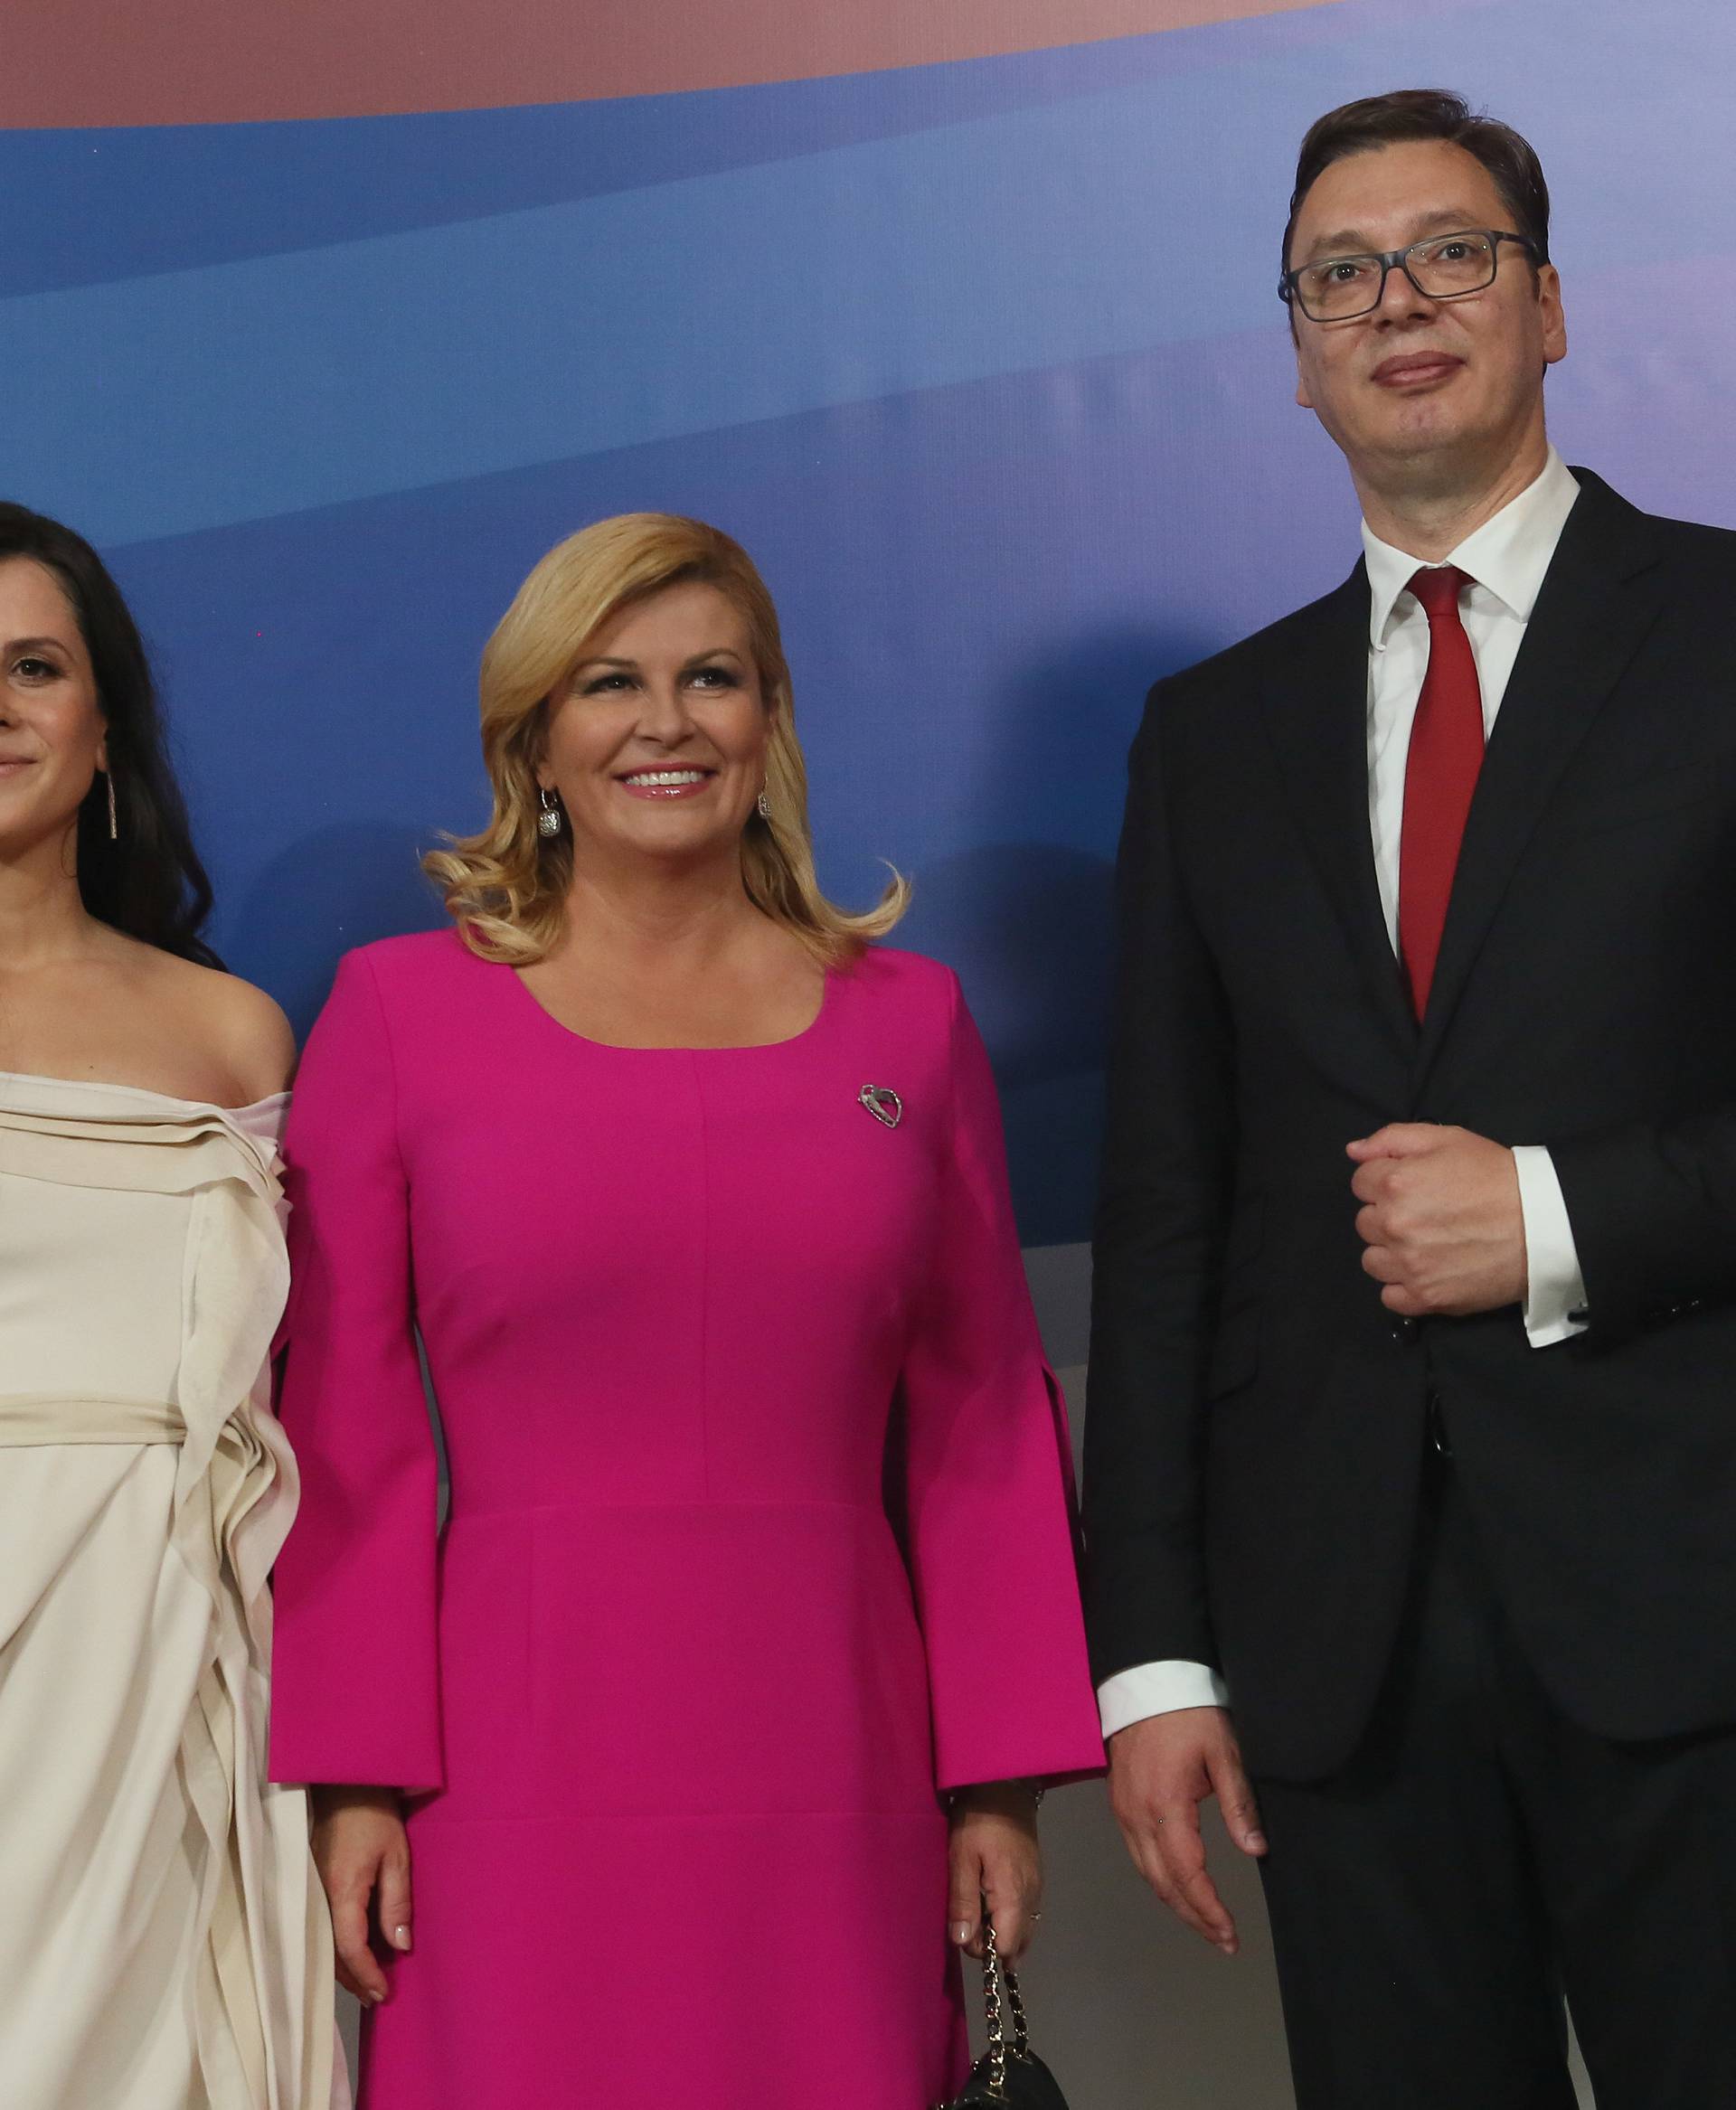 Serbia's President Aleksandar Vucic his wife Tamara and President of Croatia Kolinda Grabar Kitarovic attend an inauguration ceremony in Belgrade